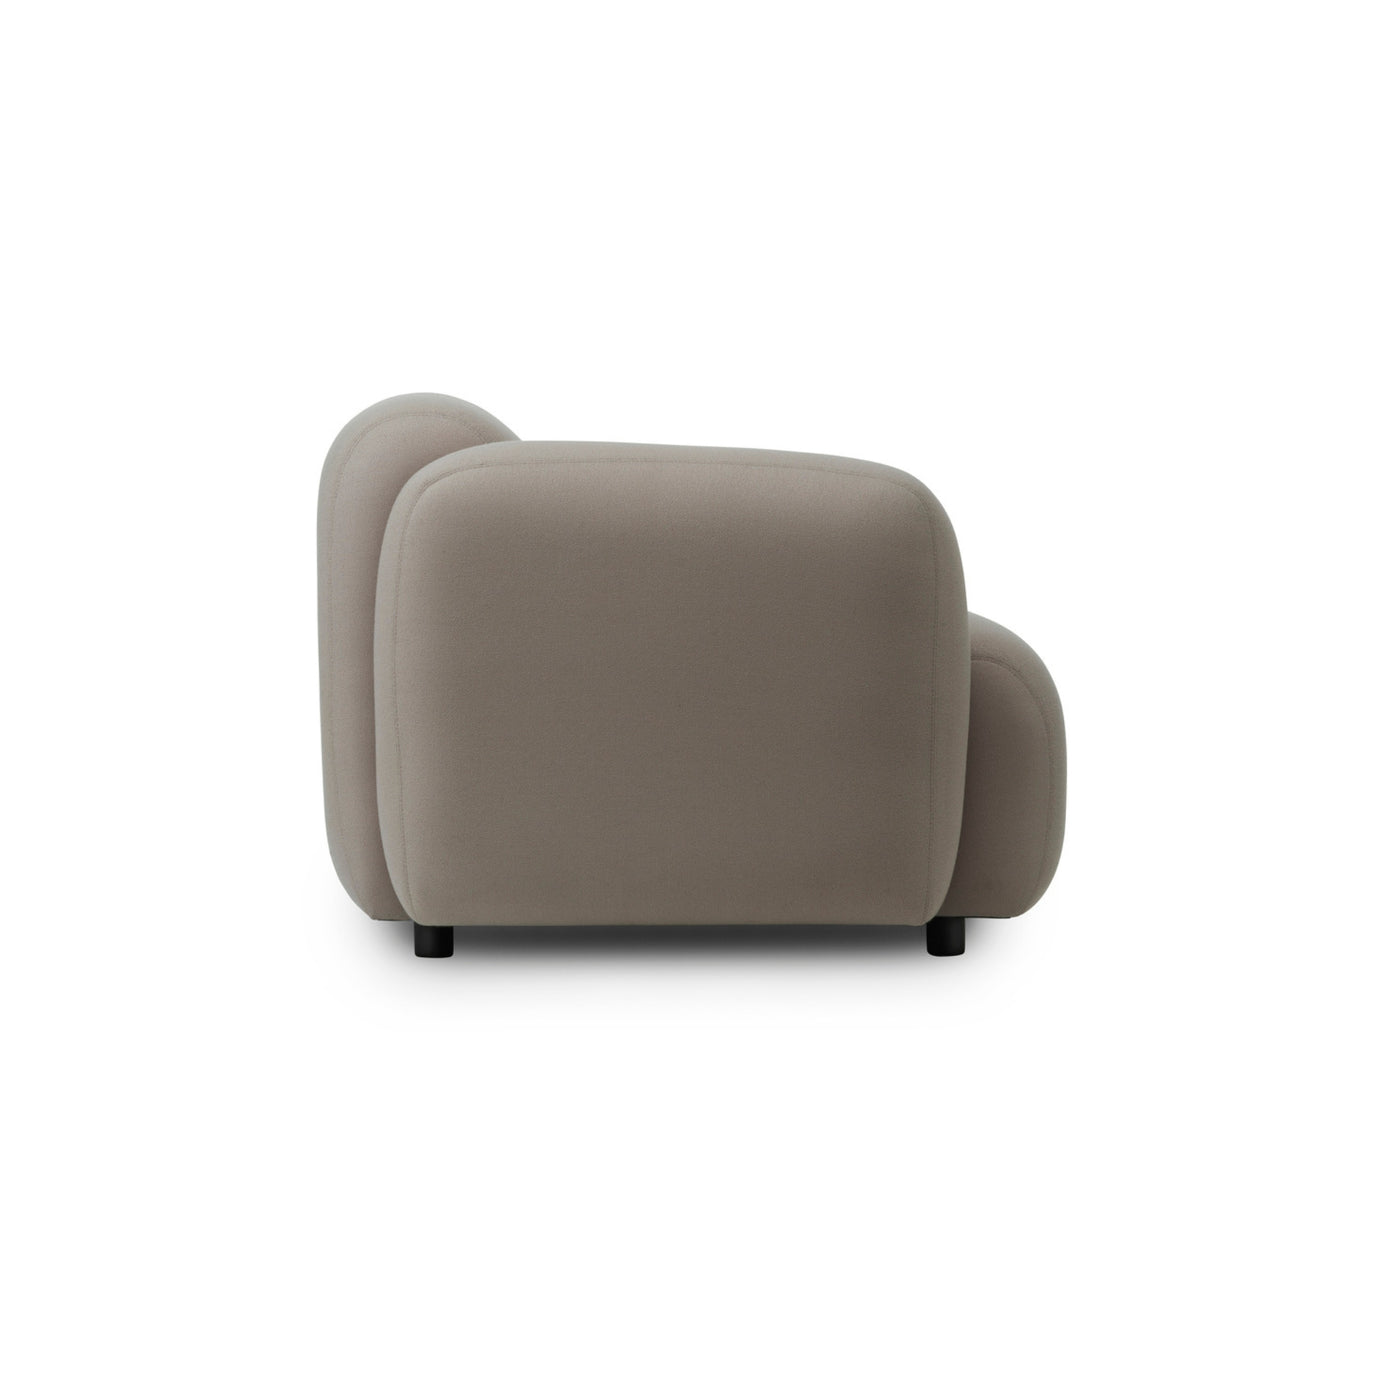 Normann Copenhagen Swell 2 Seater Sofa at someday designs. #colour_aquarius-ceres